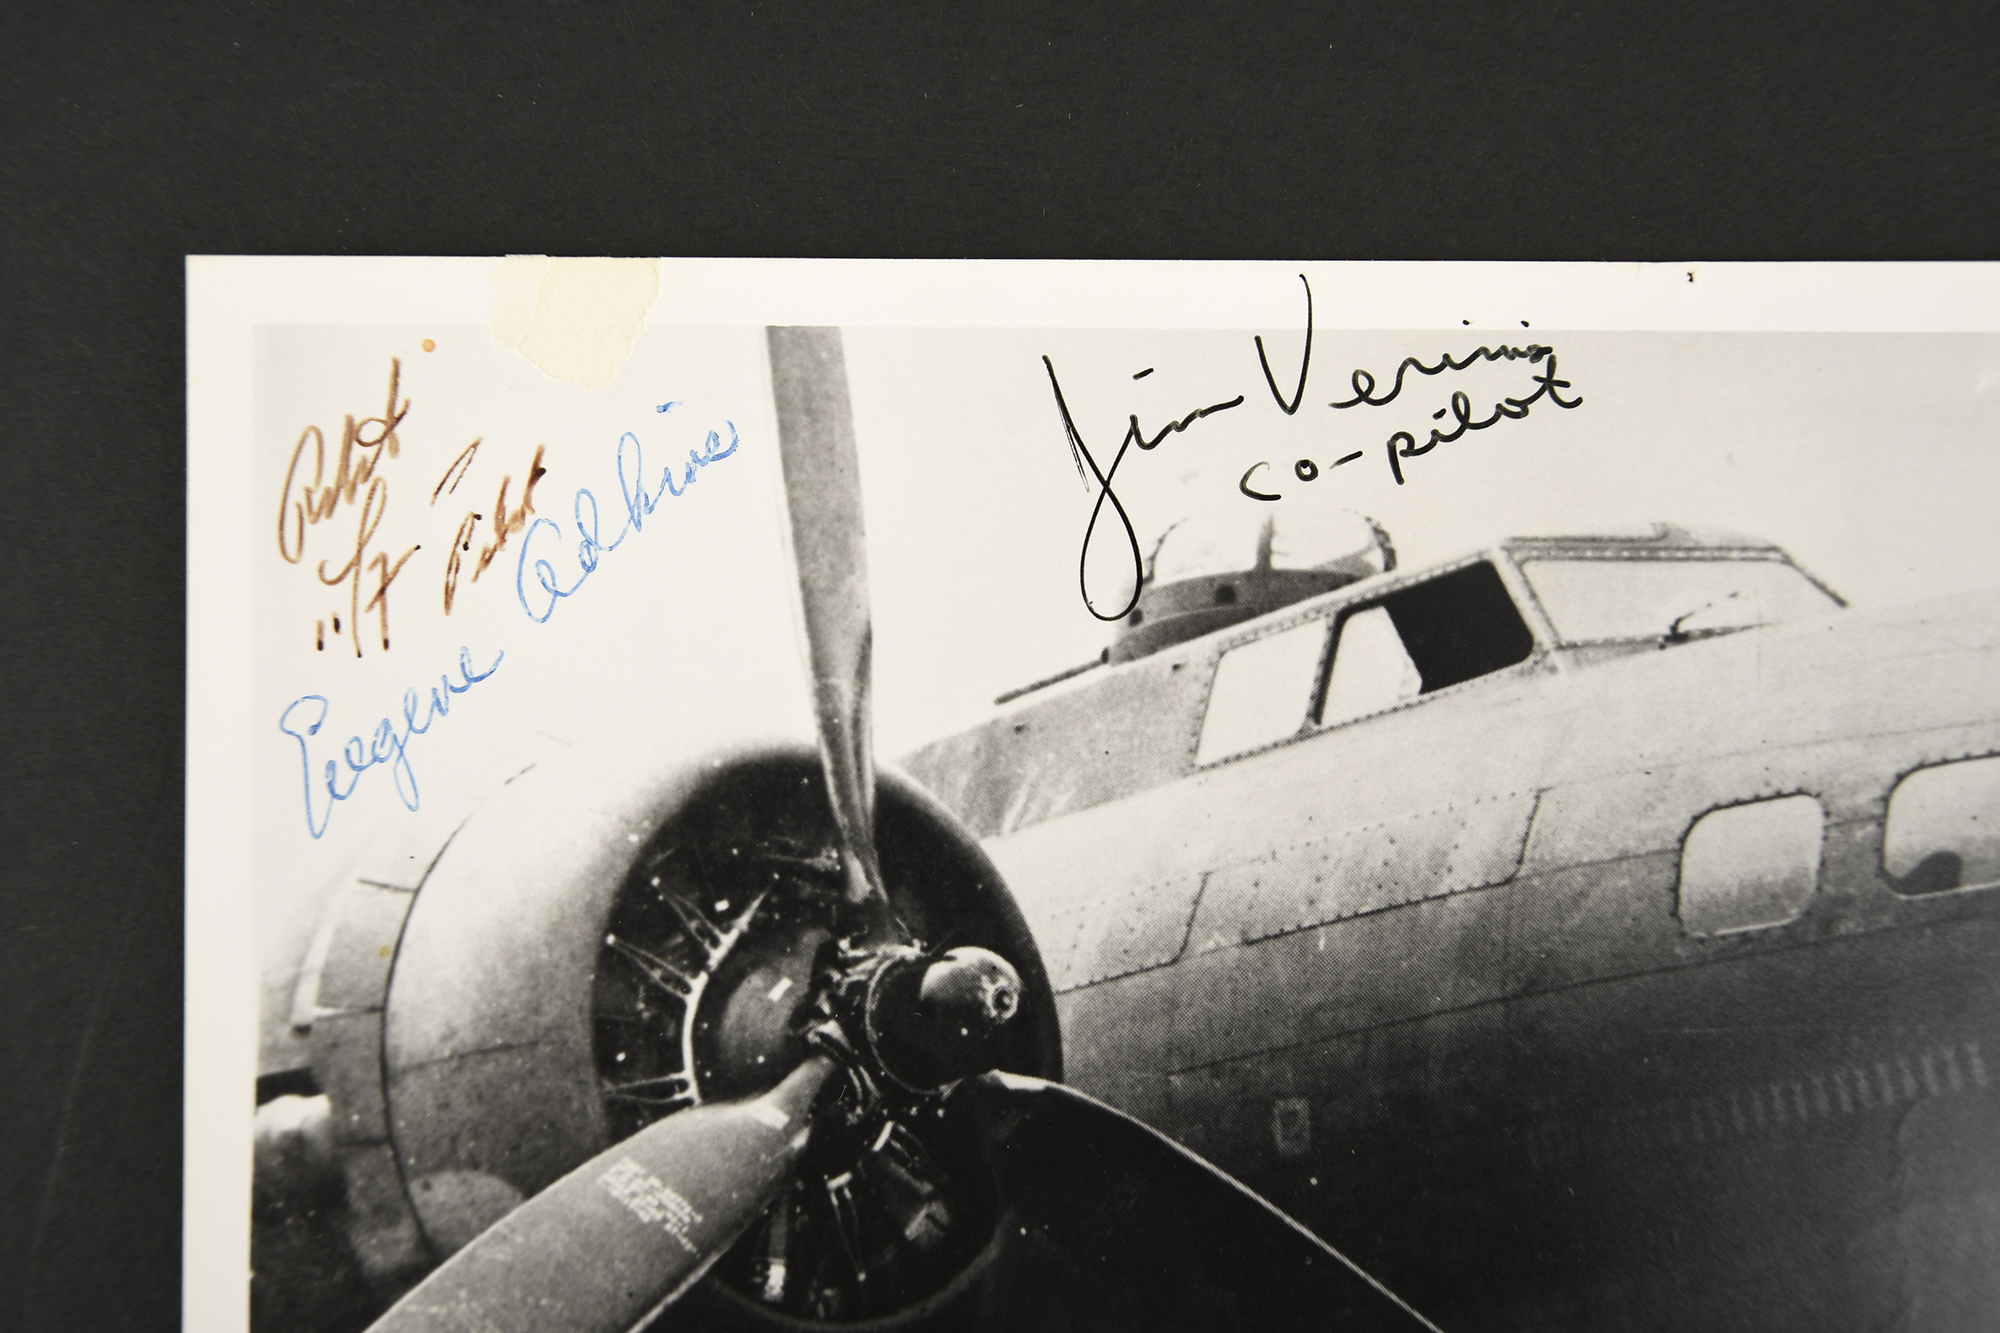 Memphis Belle Original Signatures of 8 crew members. - Image 2 of 6